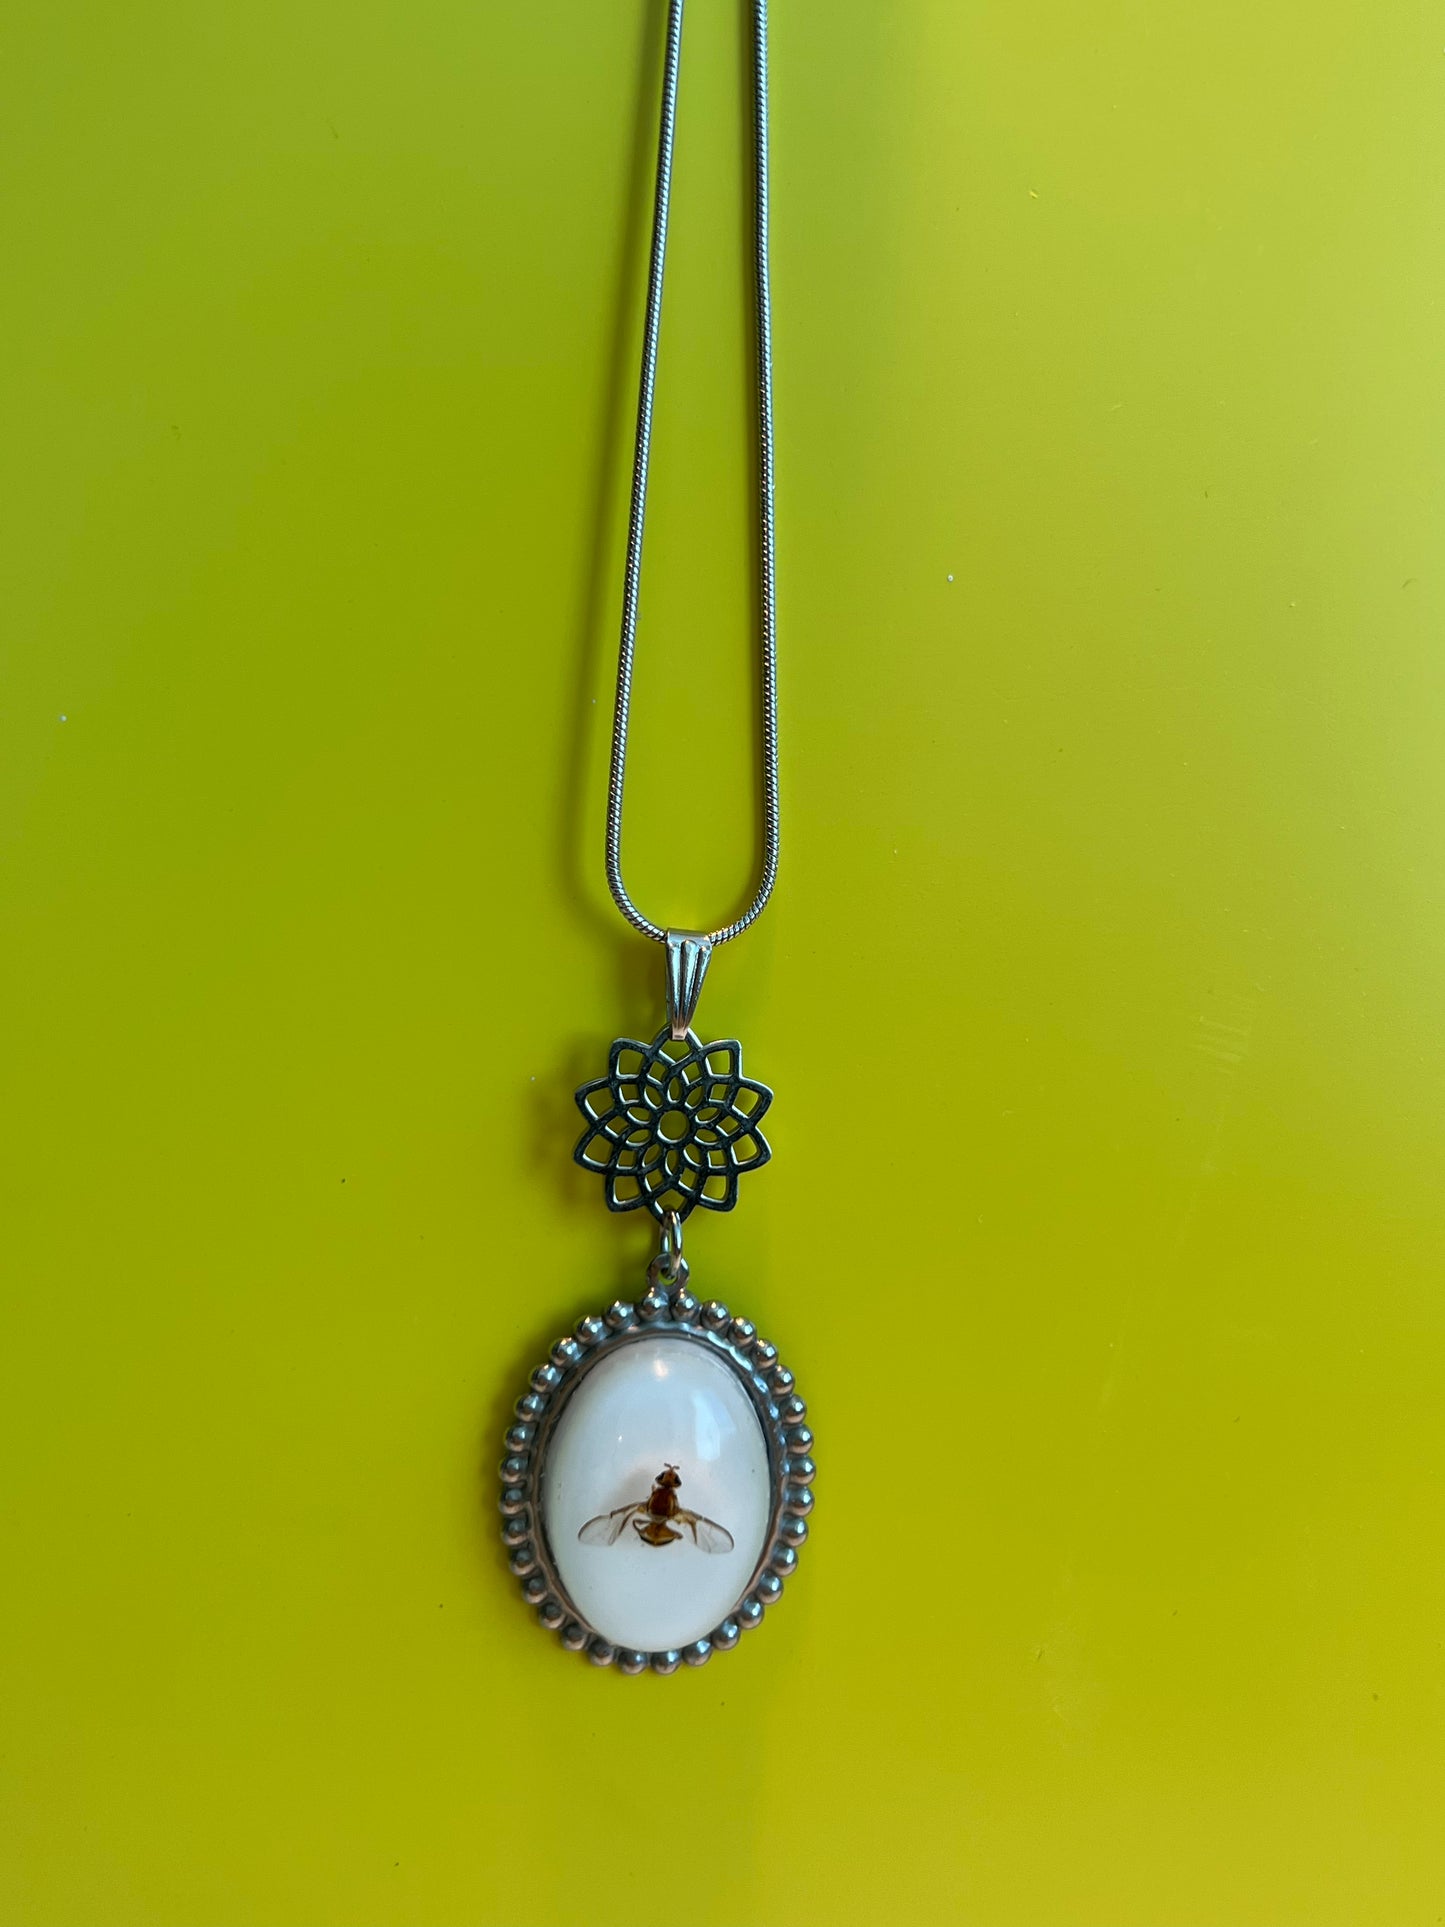 QLD Fruit Fly antique pendant